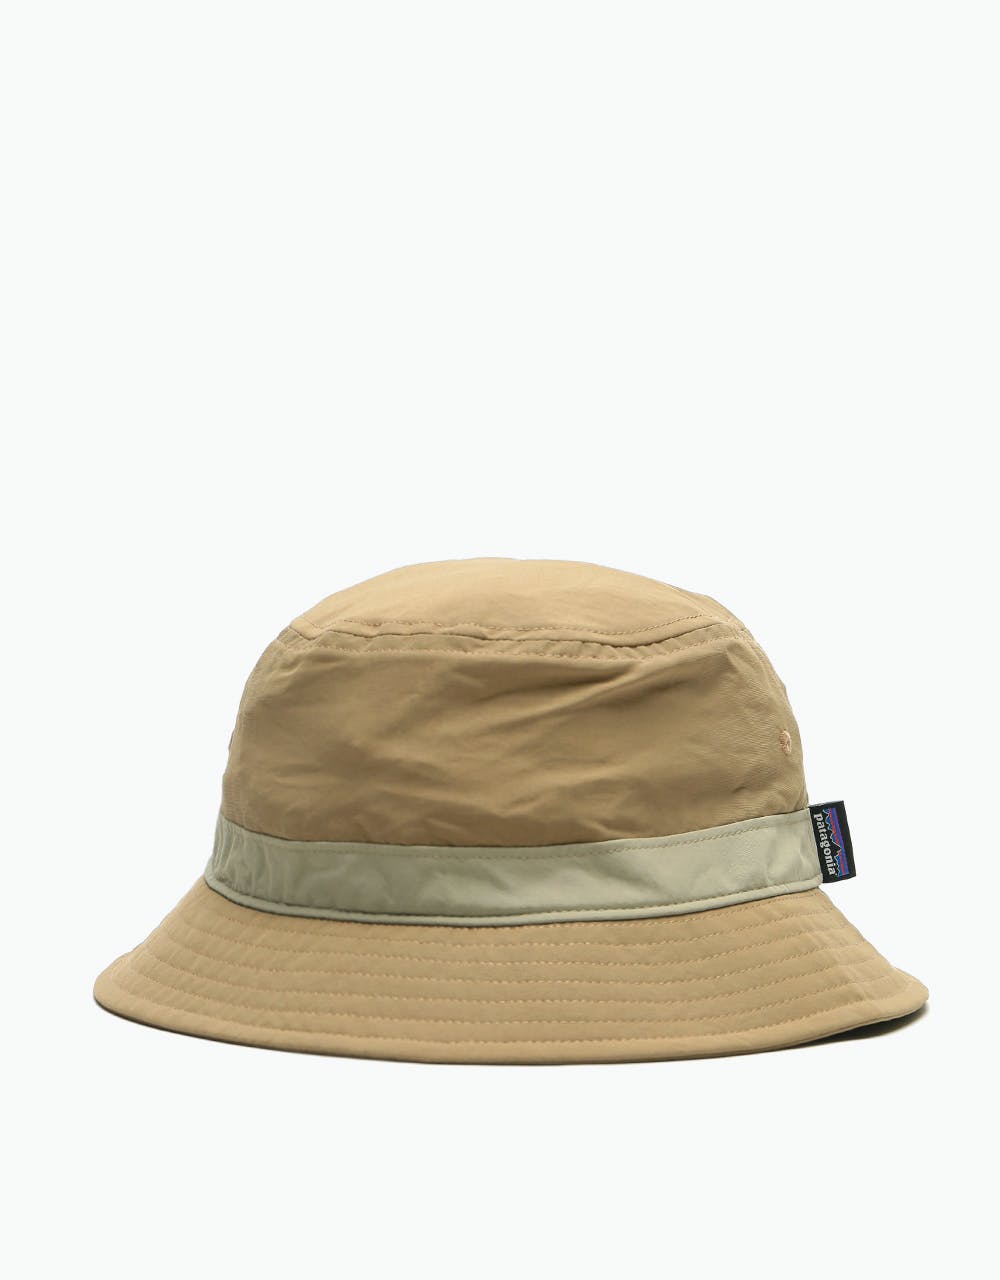 Patagonia Wavefarer™ Bucket Hat - Ash Tan